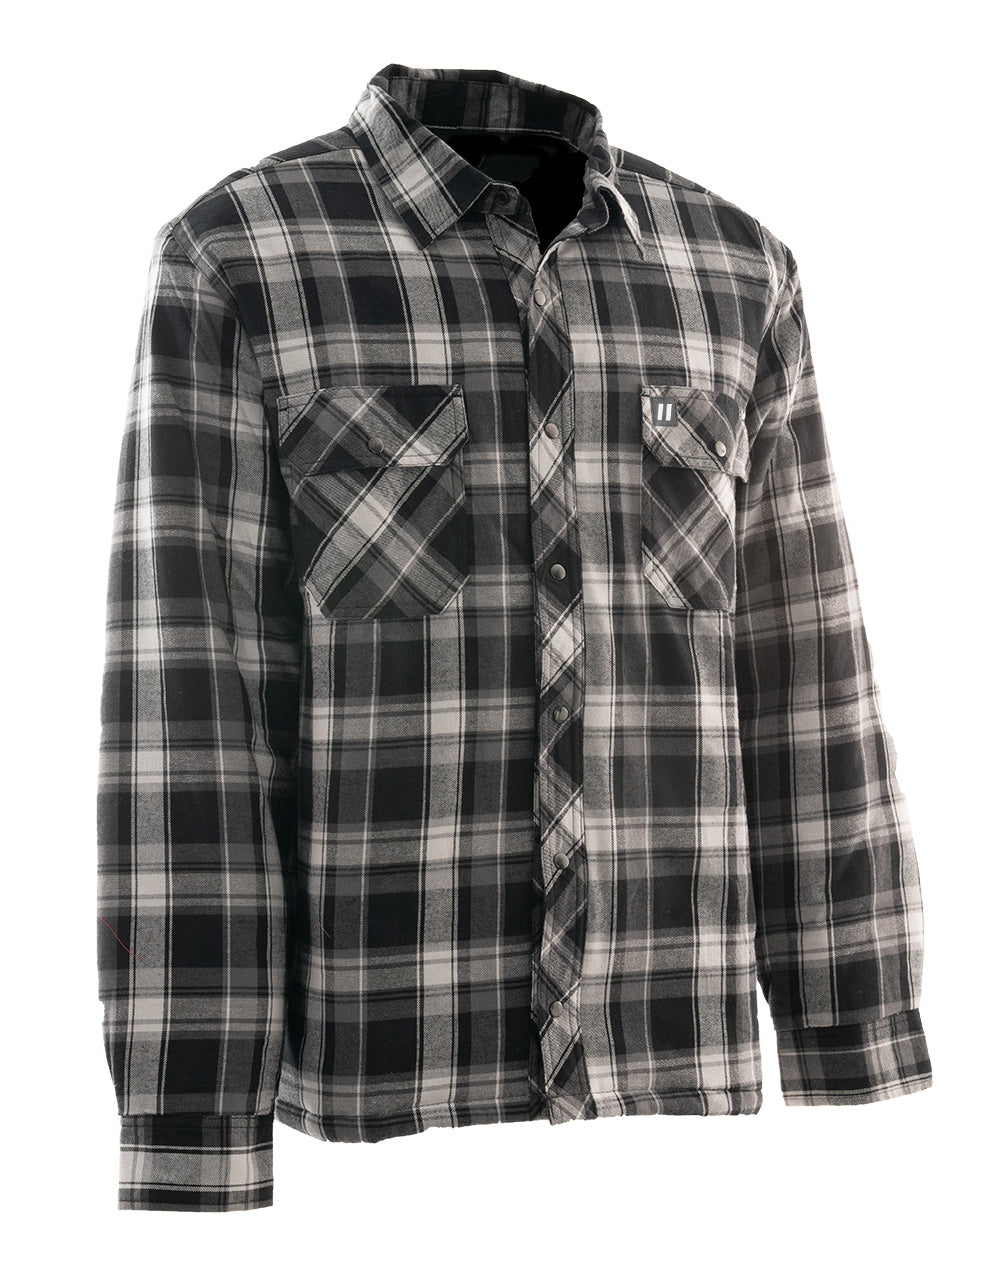 ForceField Hi Vis Tartan Plaid Quilt-Lined Flannel Shirt Jacket